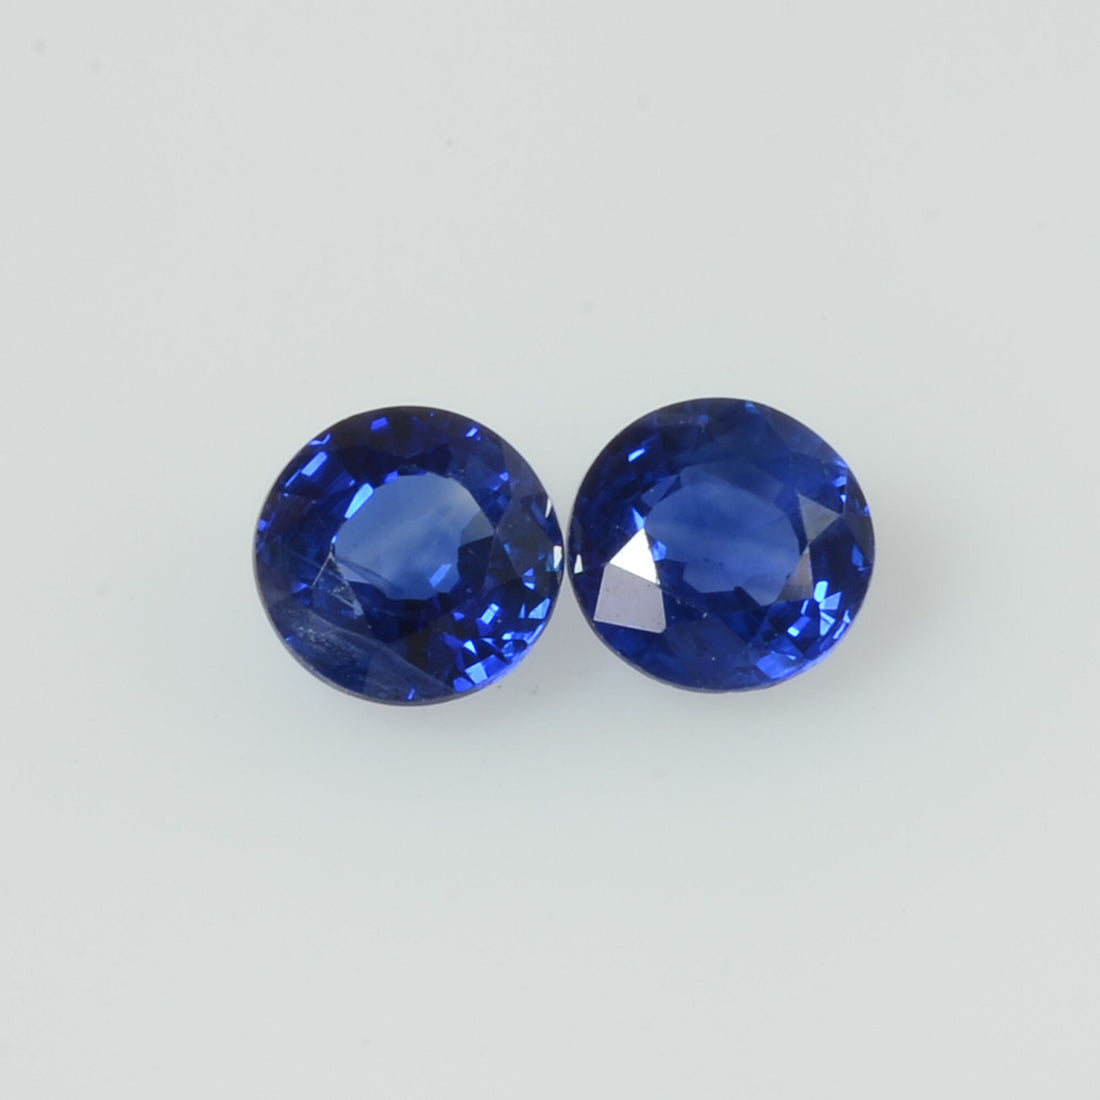 4.1-4.2 mm Natural Blue Sapphire Loose Gemstone Round Diamond Cut